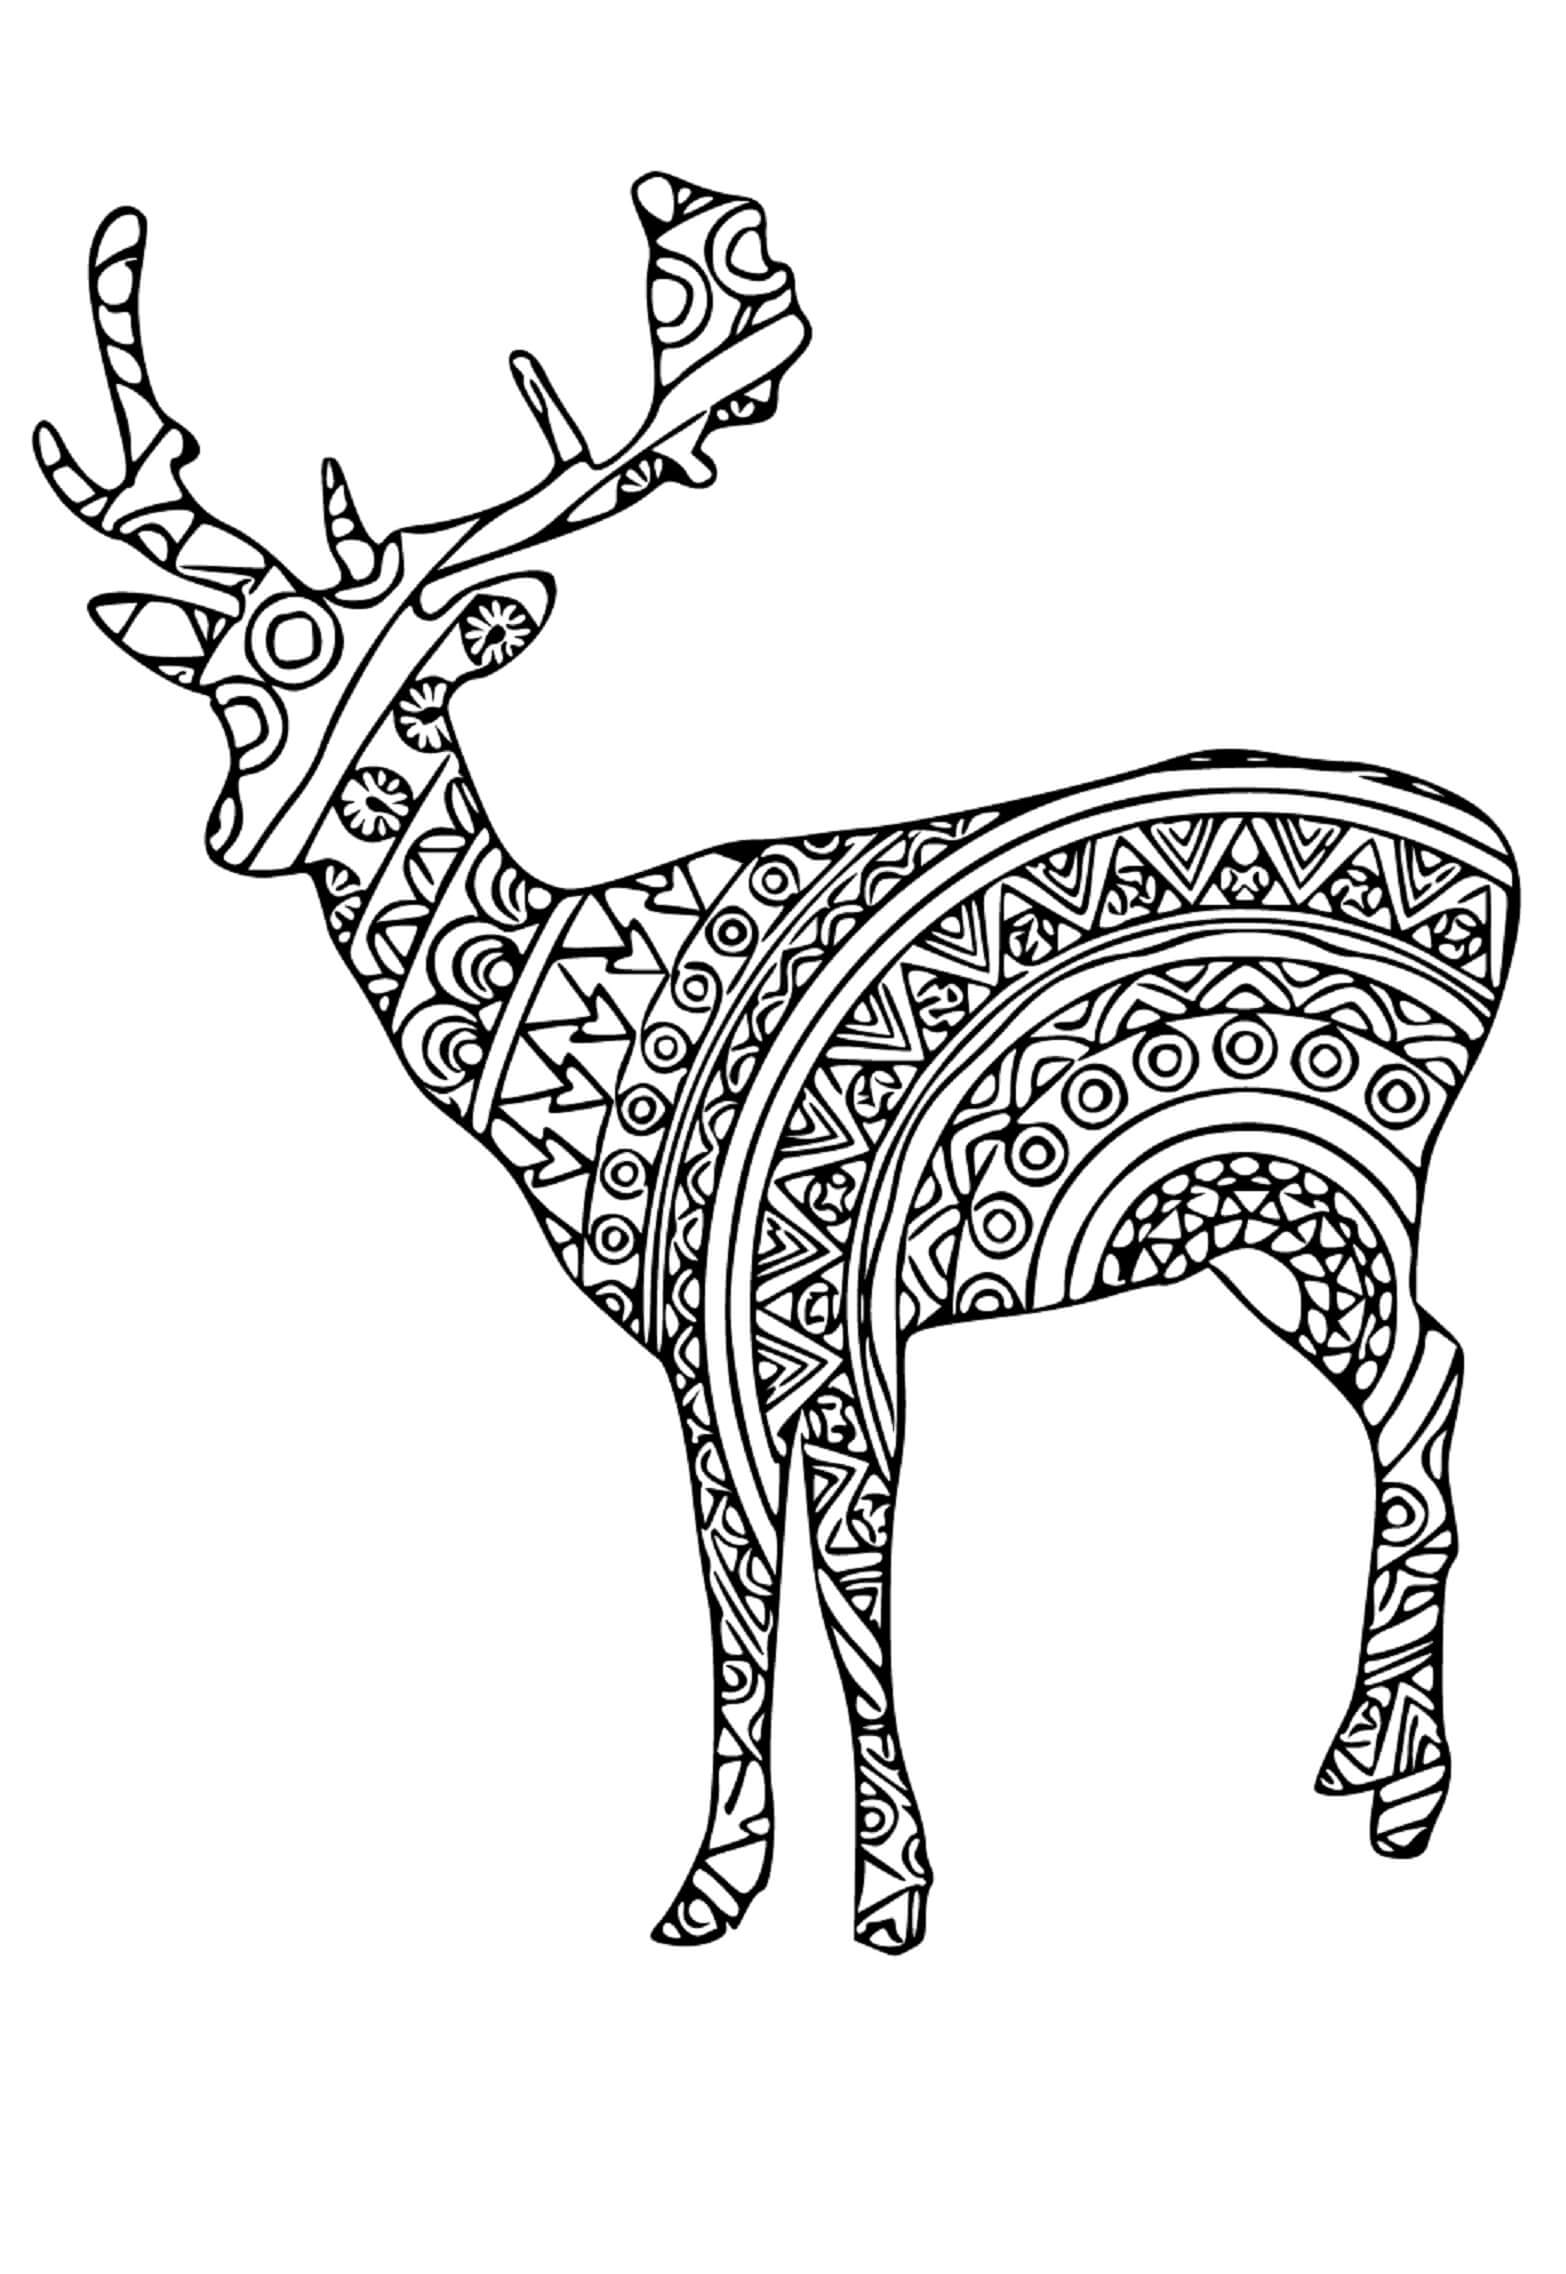 Mandala Deer Coloring Page - Sheet 5 Mandalas